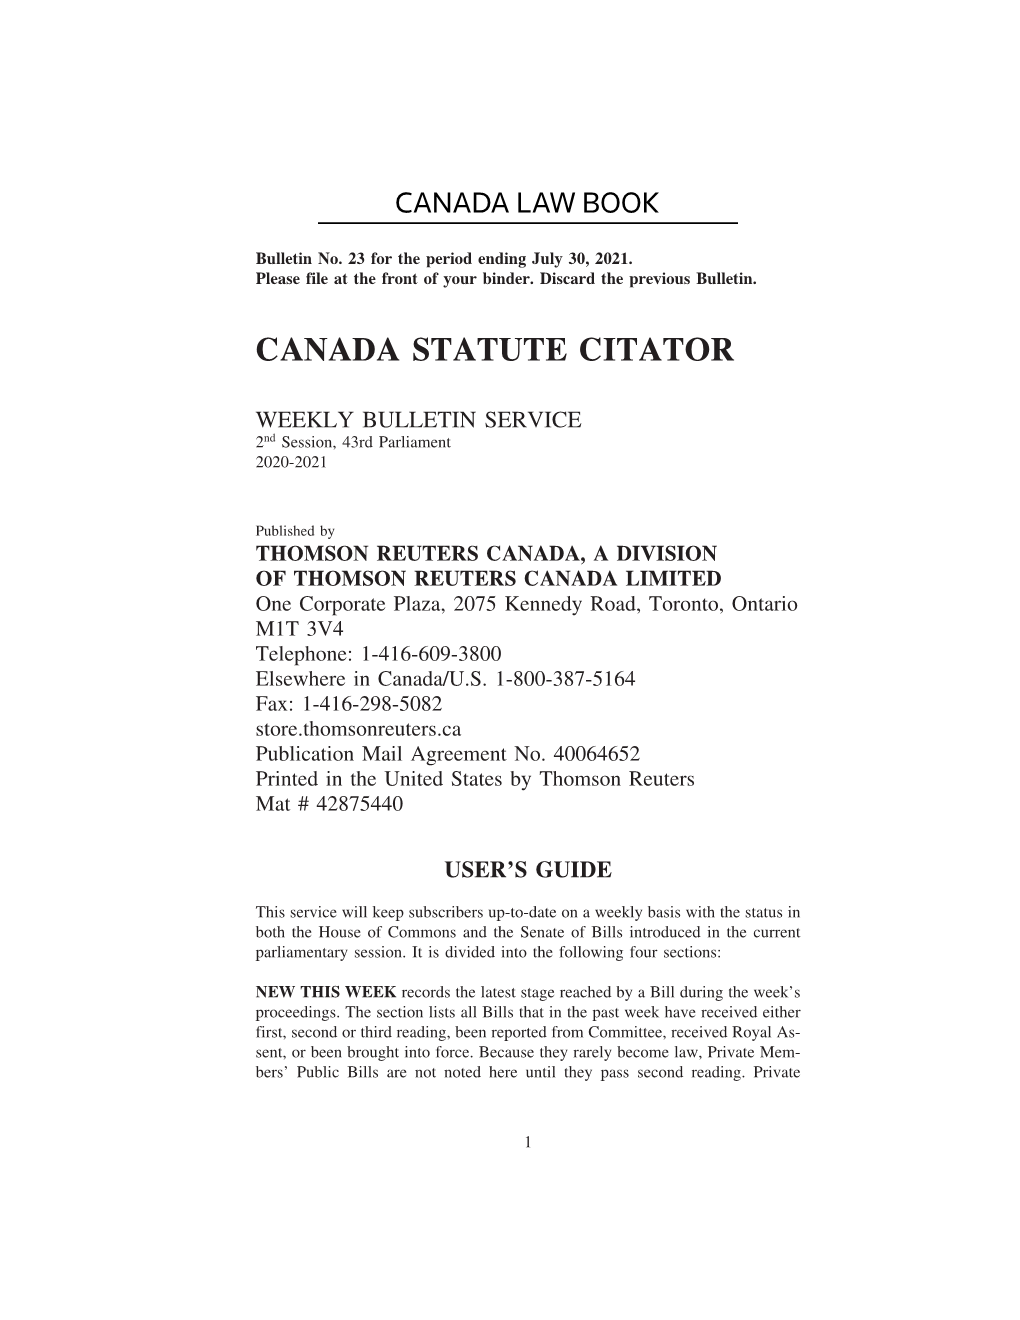 Canada Statute Citator Bulletin